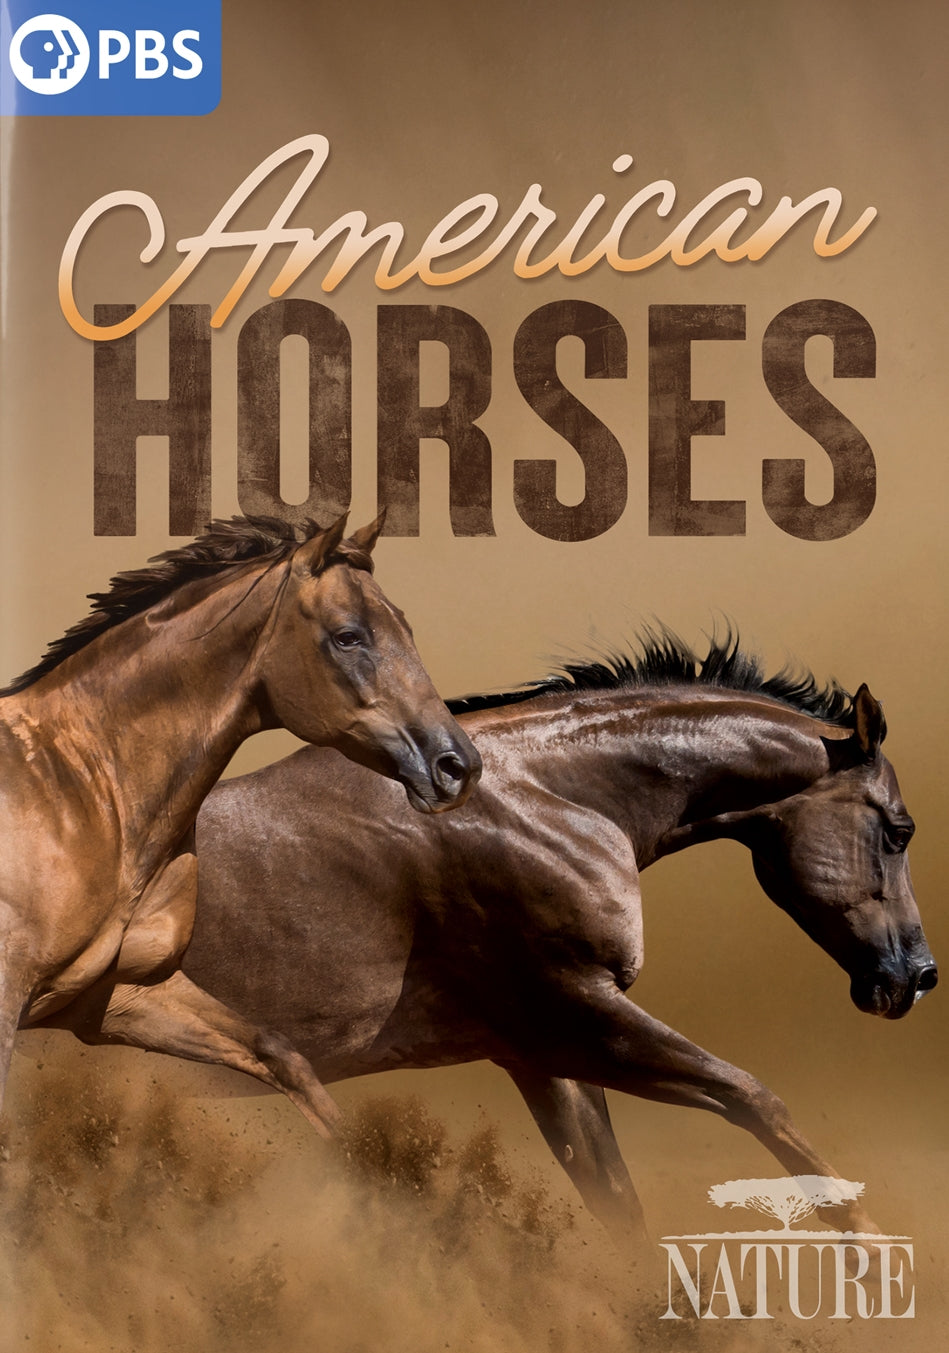 Nature: American Horses cover art